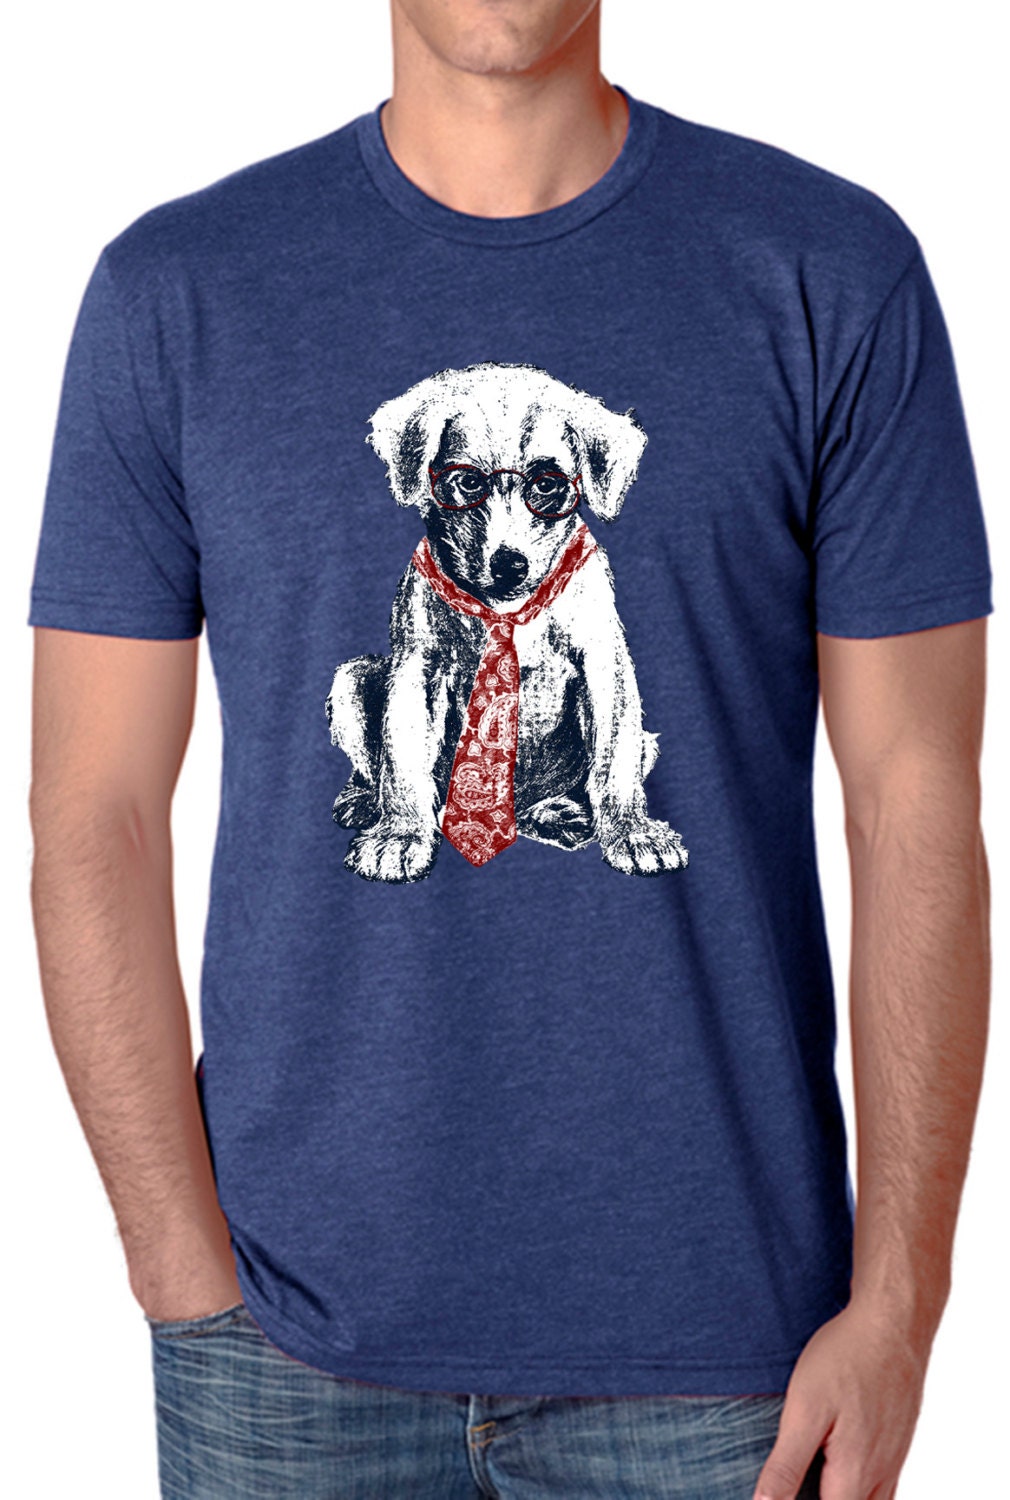 Dog Dog Shirt Dog Tshirt Mens Shirts Dog Lover Tshirt